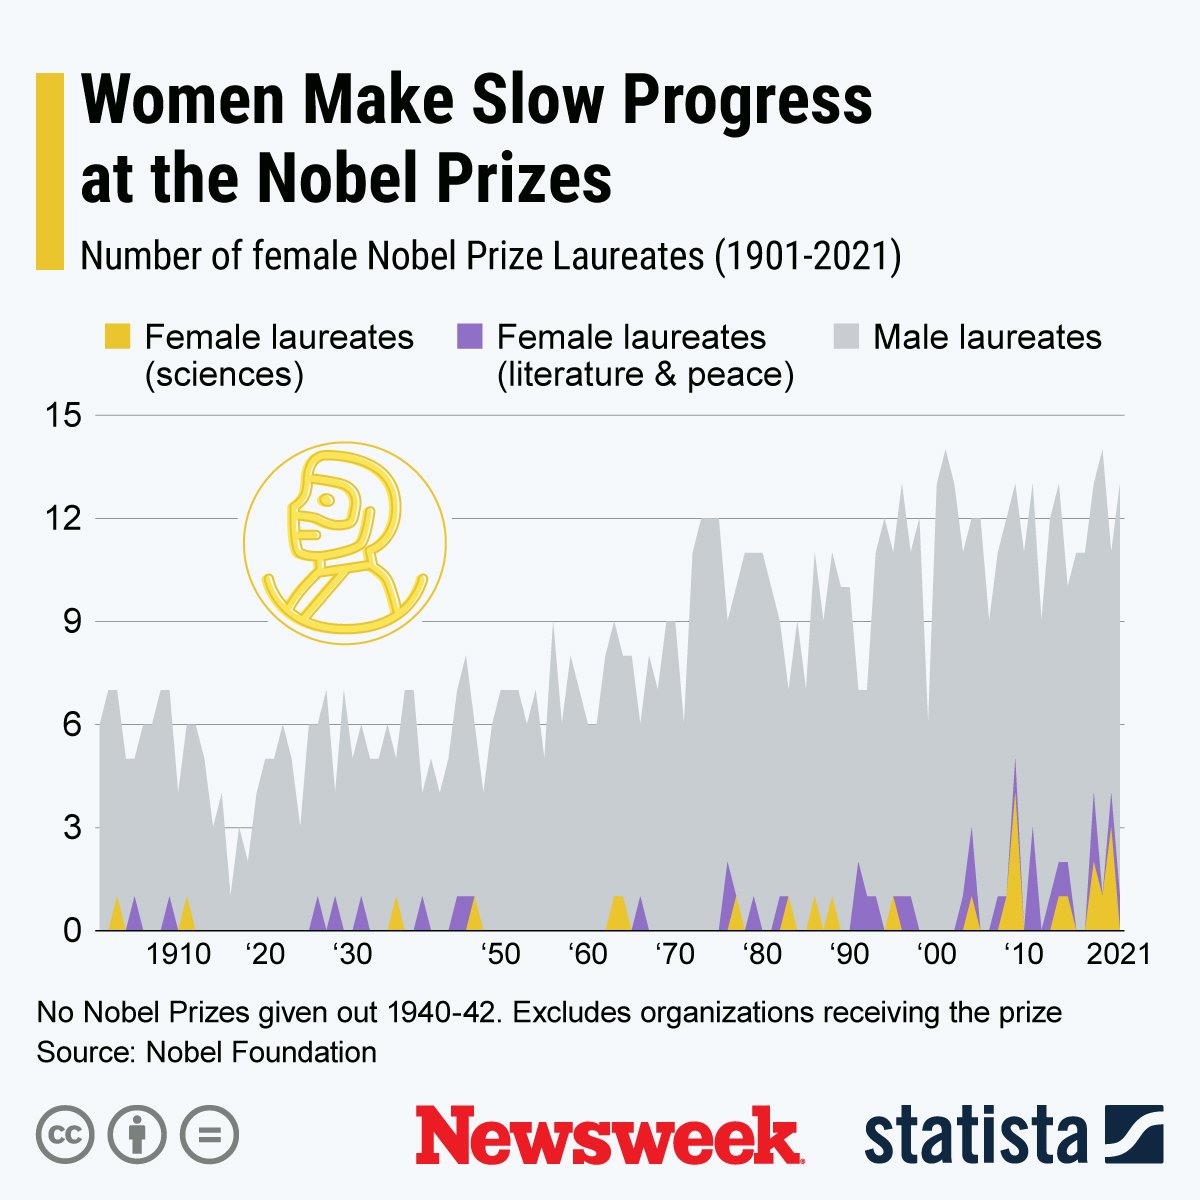 Women Make Slow Progress at the Nobels